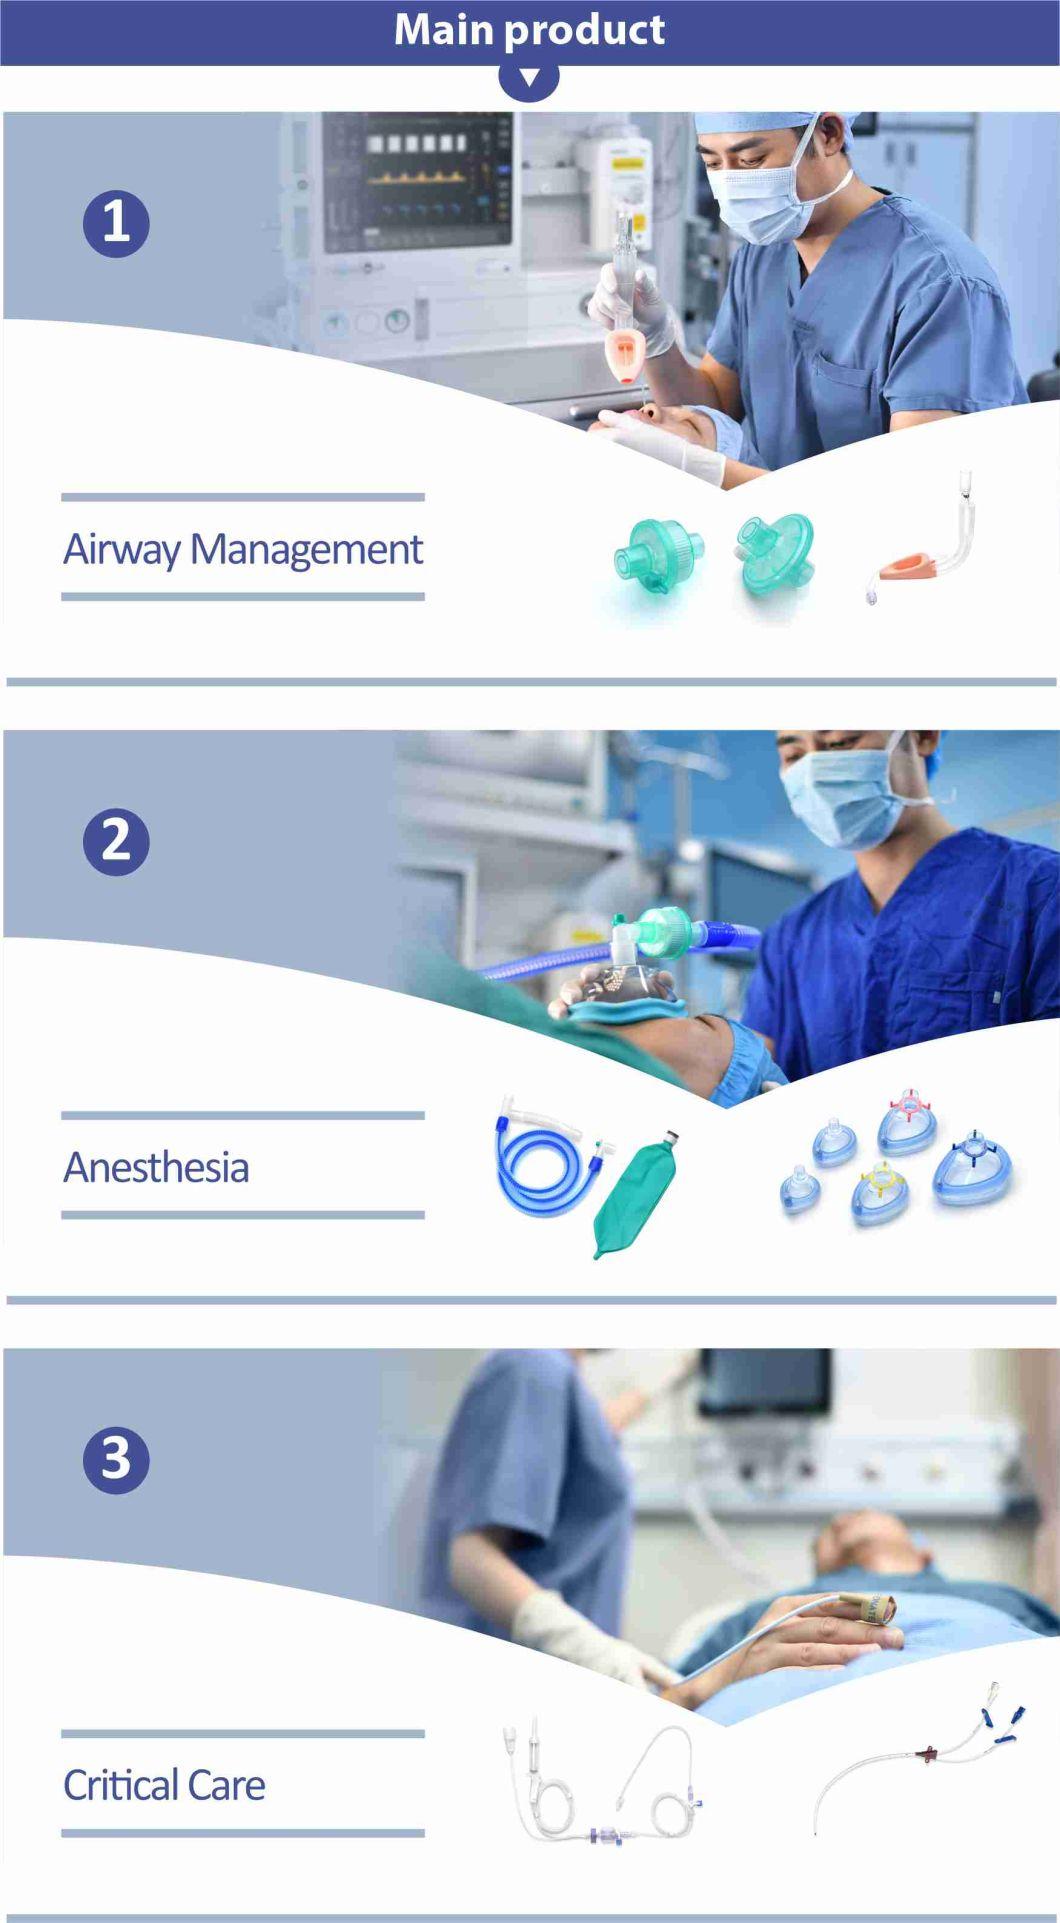 Hisern Medical Supply Disposable Laryngeal Mask Airway (Proseal)